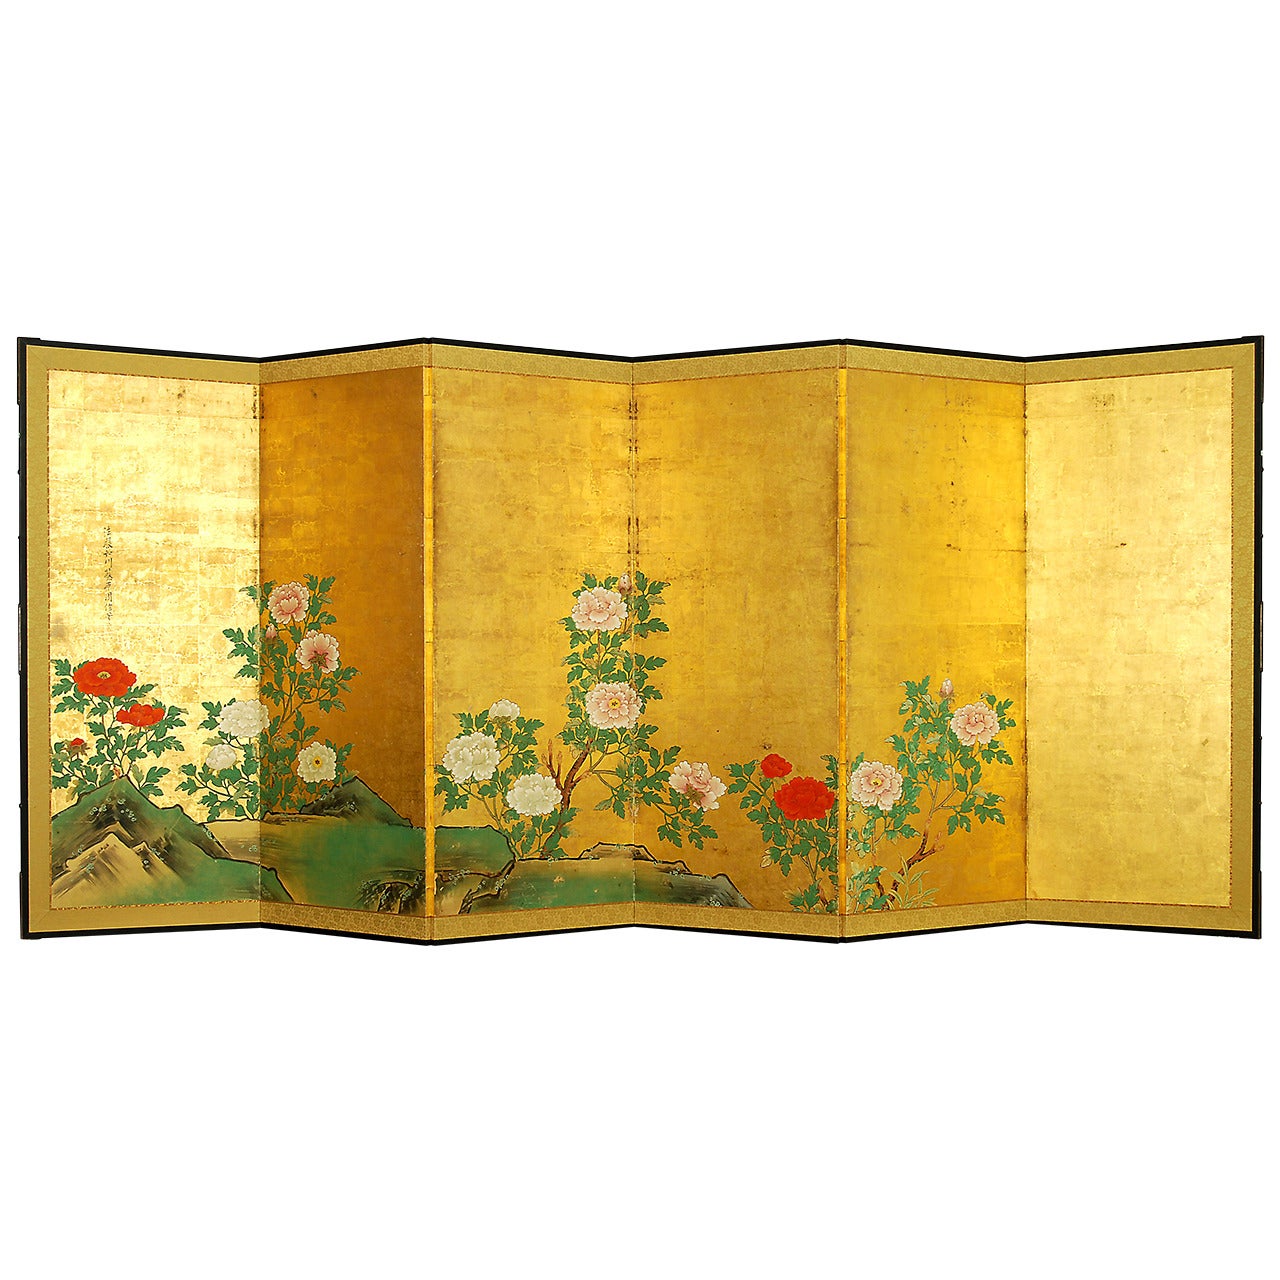 Antique Japanese Six-Panel Screen by Kano Chikanobu